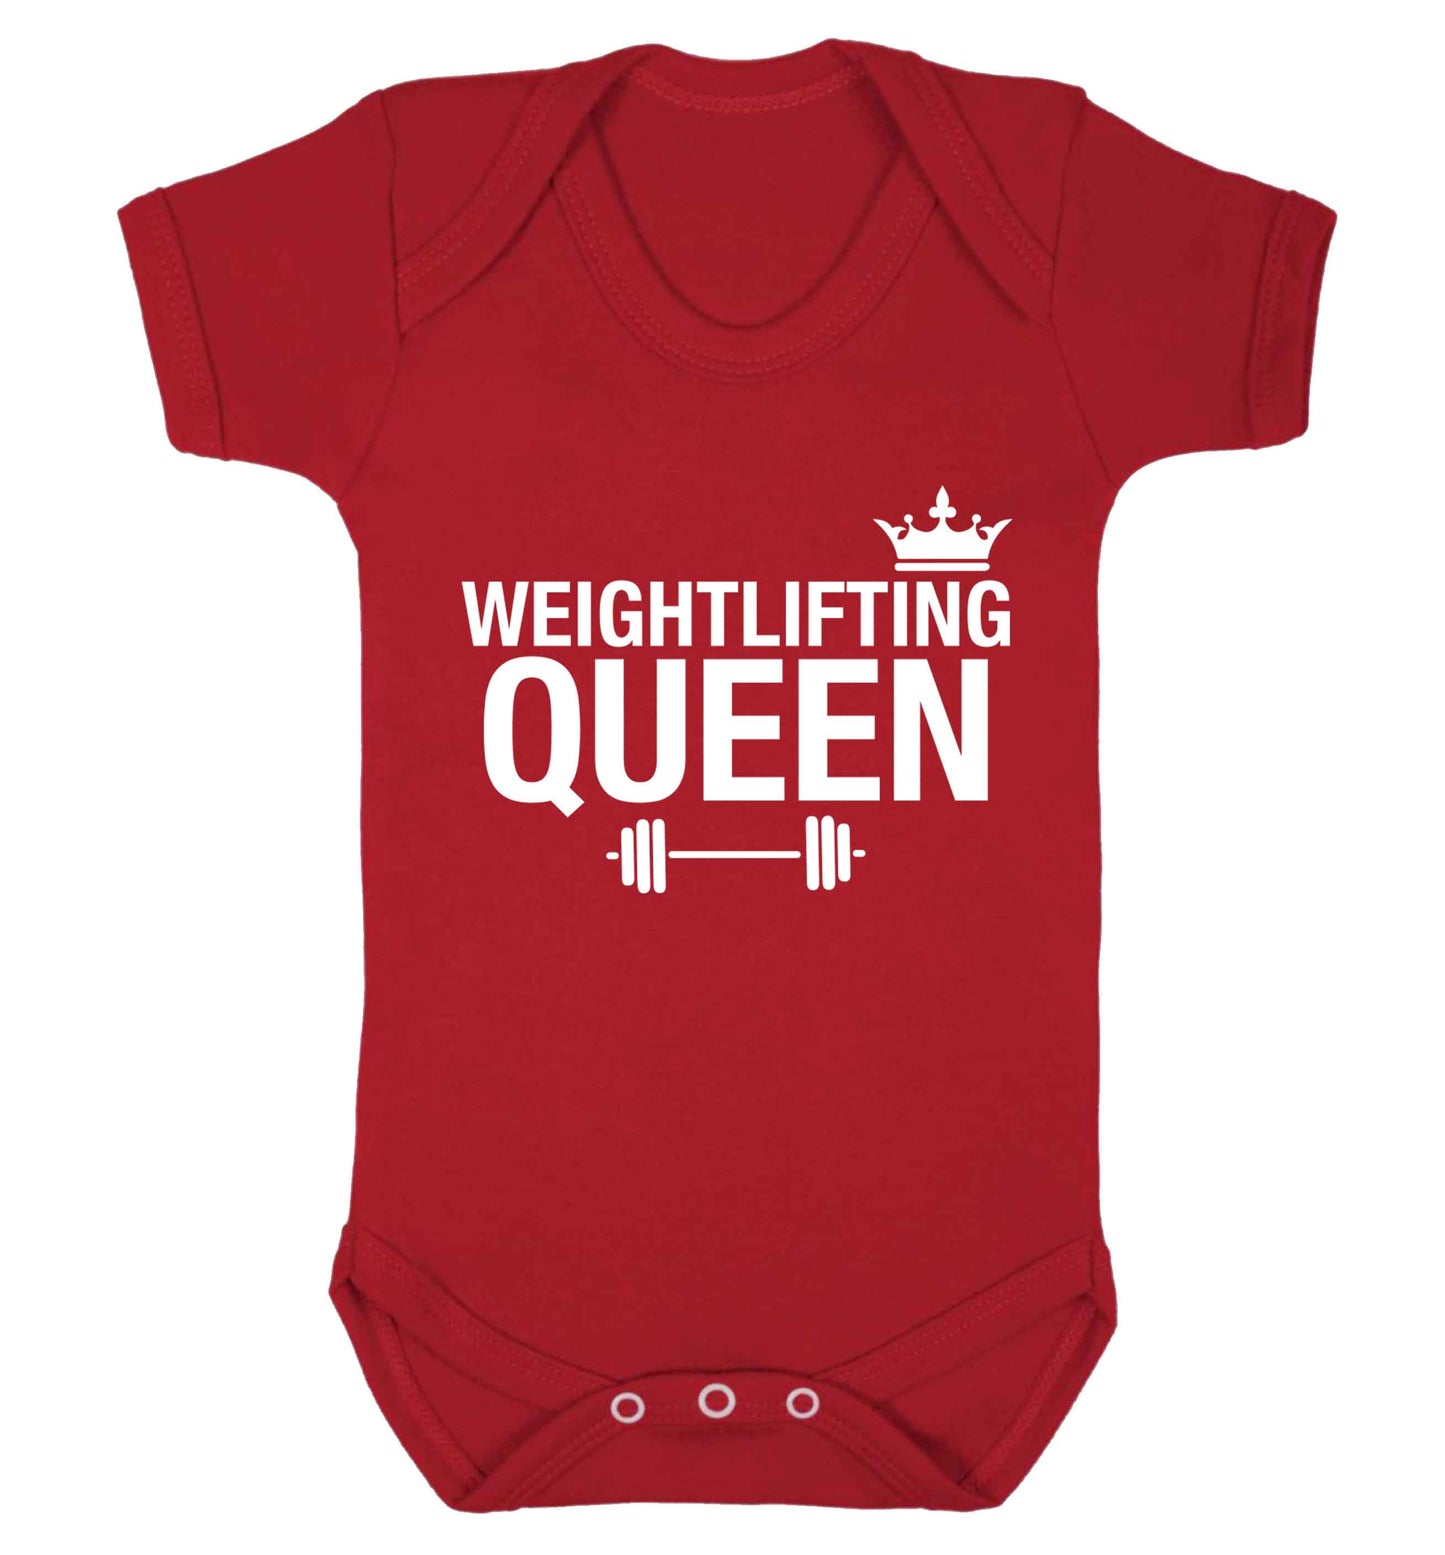 Weightlifting Queen Baby Vest red 18-24 months